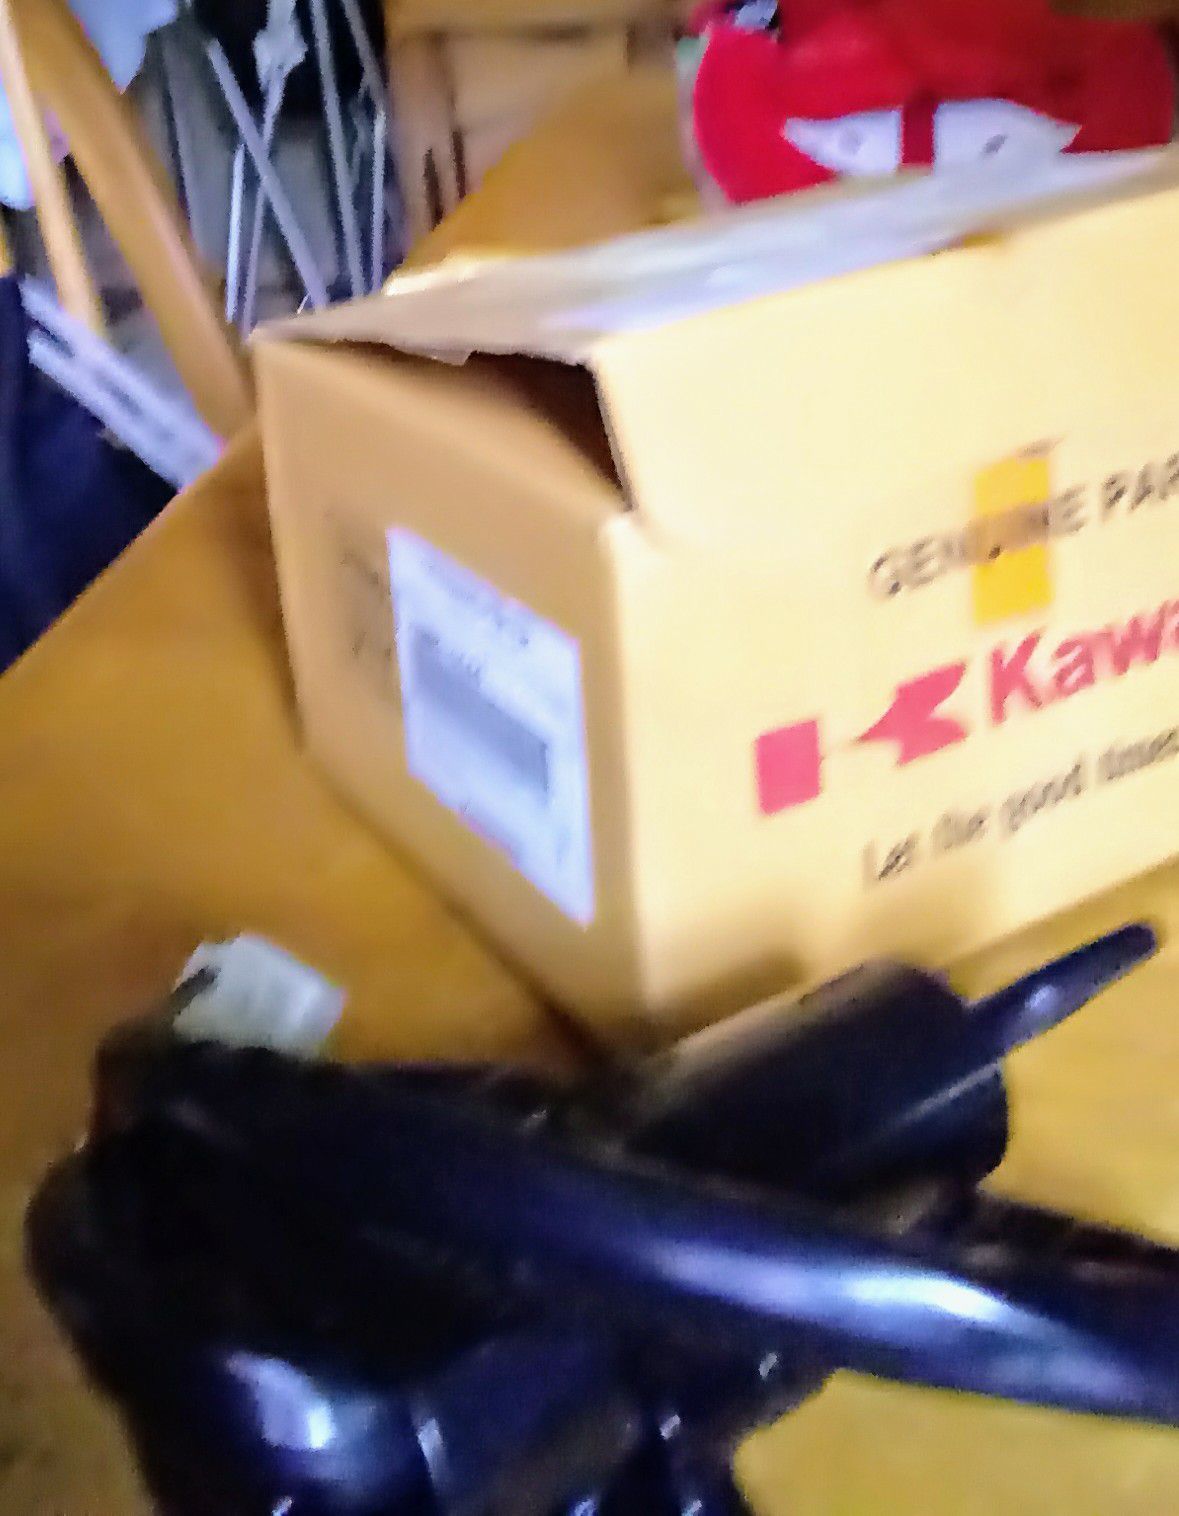 Kawasaki 2013-18 ignition,brand new w key inn box factory